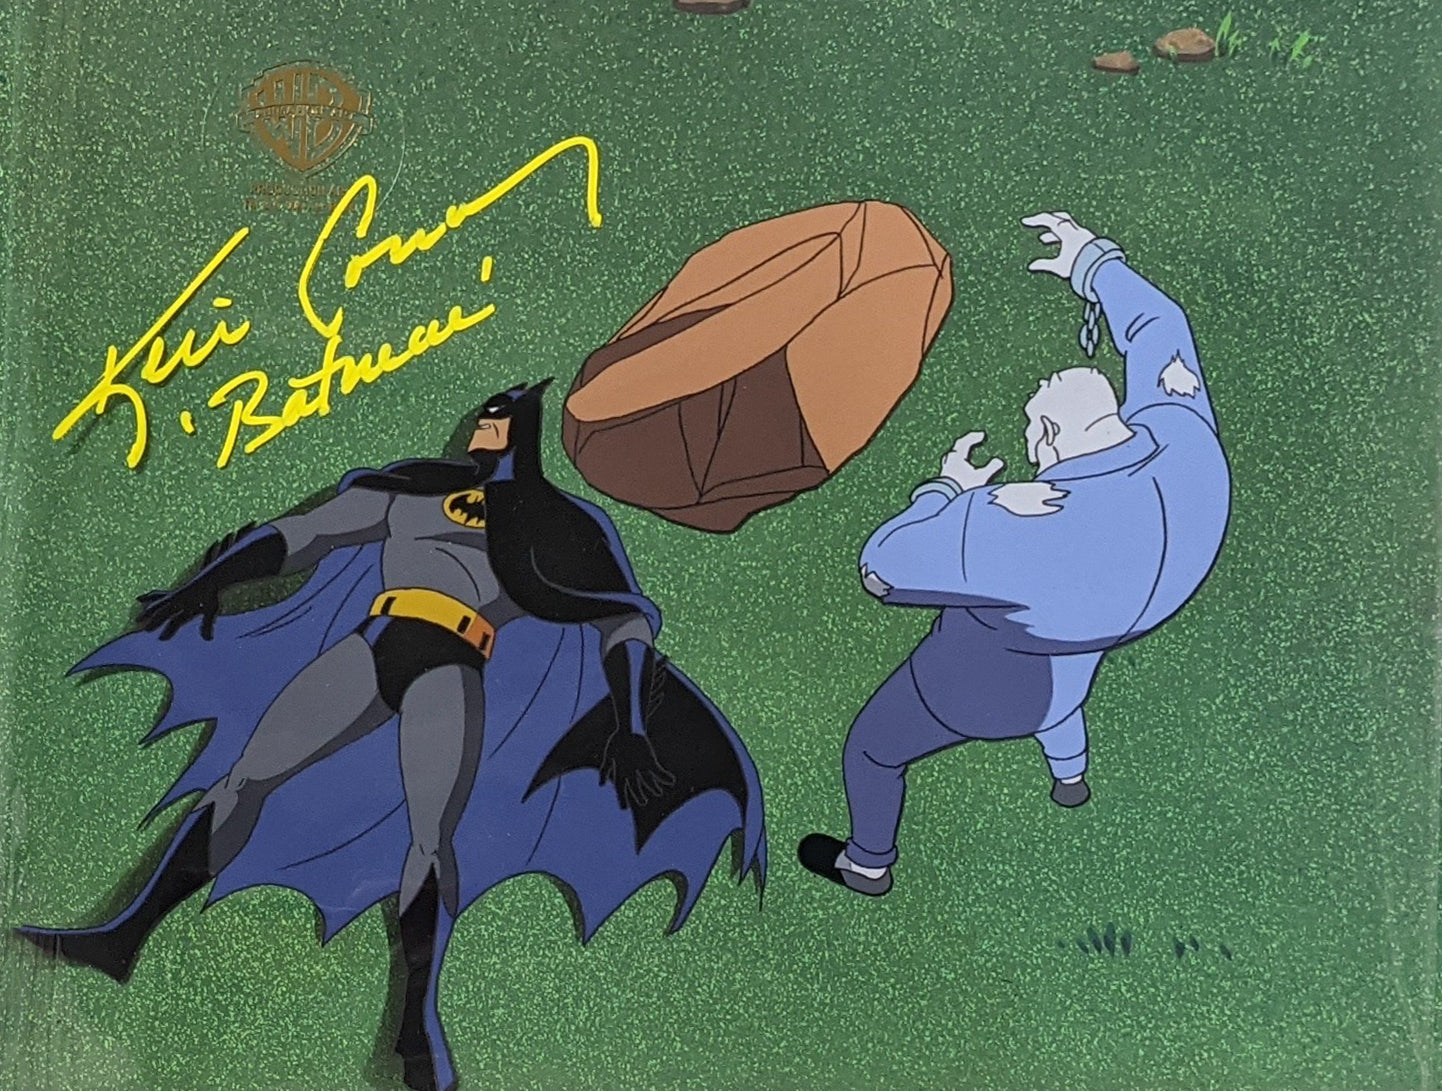 Kevin Conroy Batman 10x12 Signed Animation Production Cel Autograph JSA Certified COA Auto